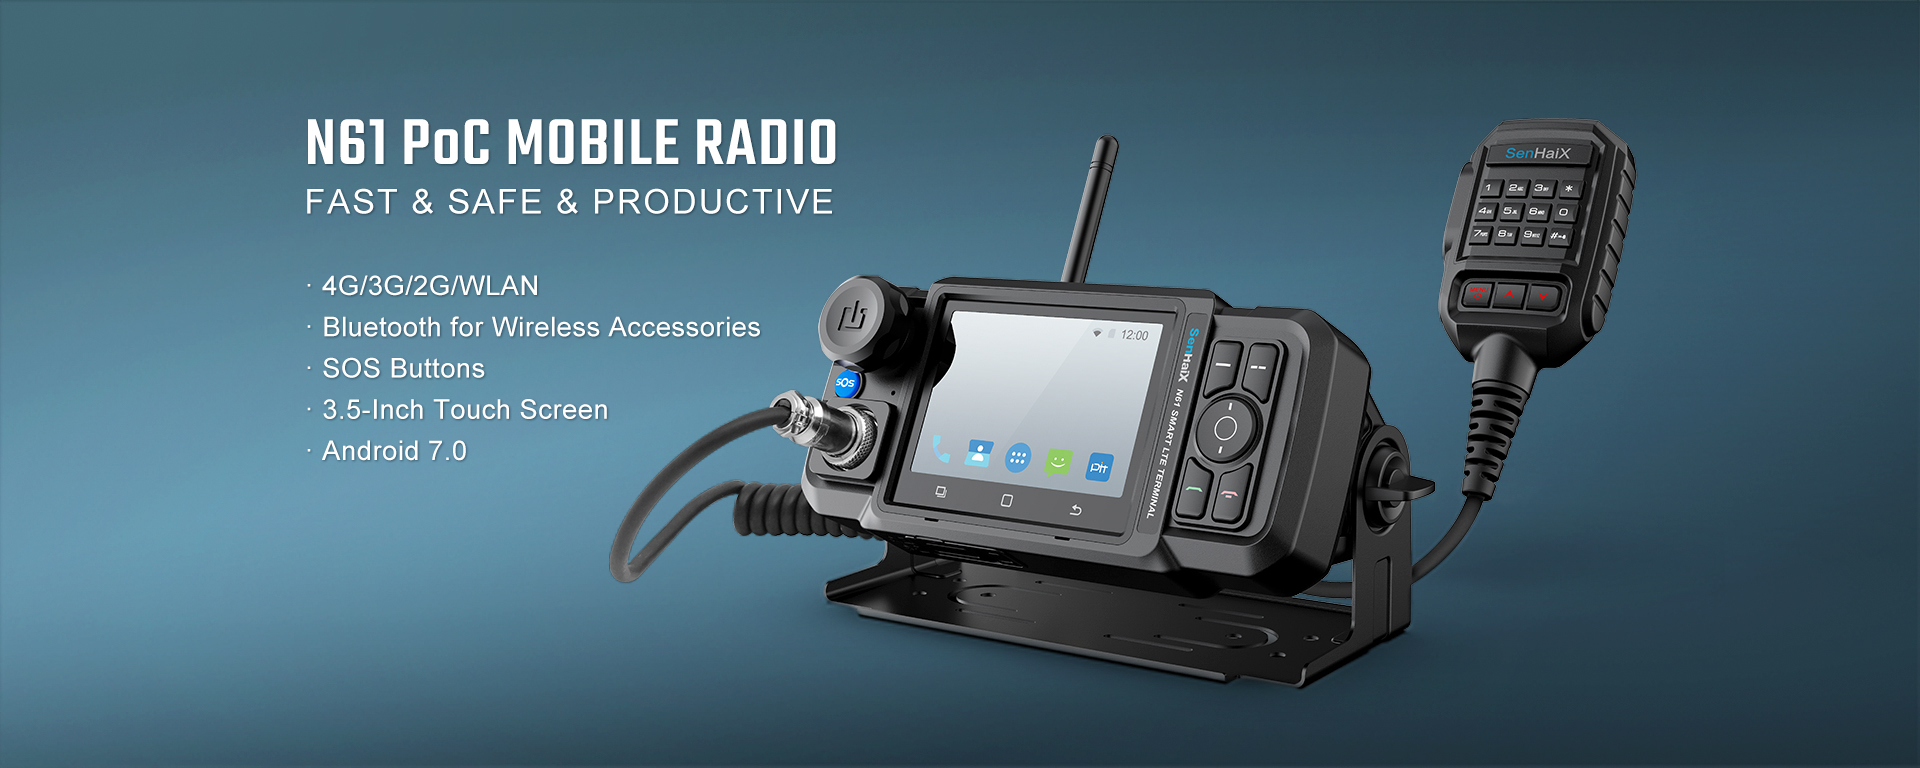 N61 PoC Mobile Radio